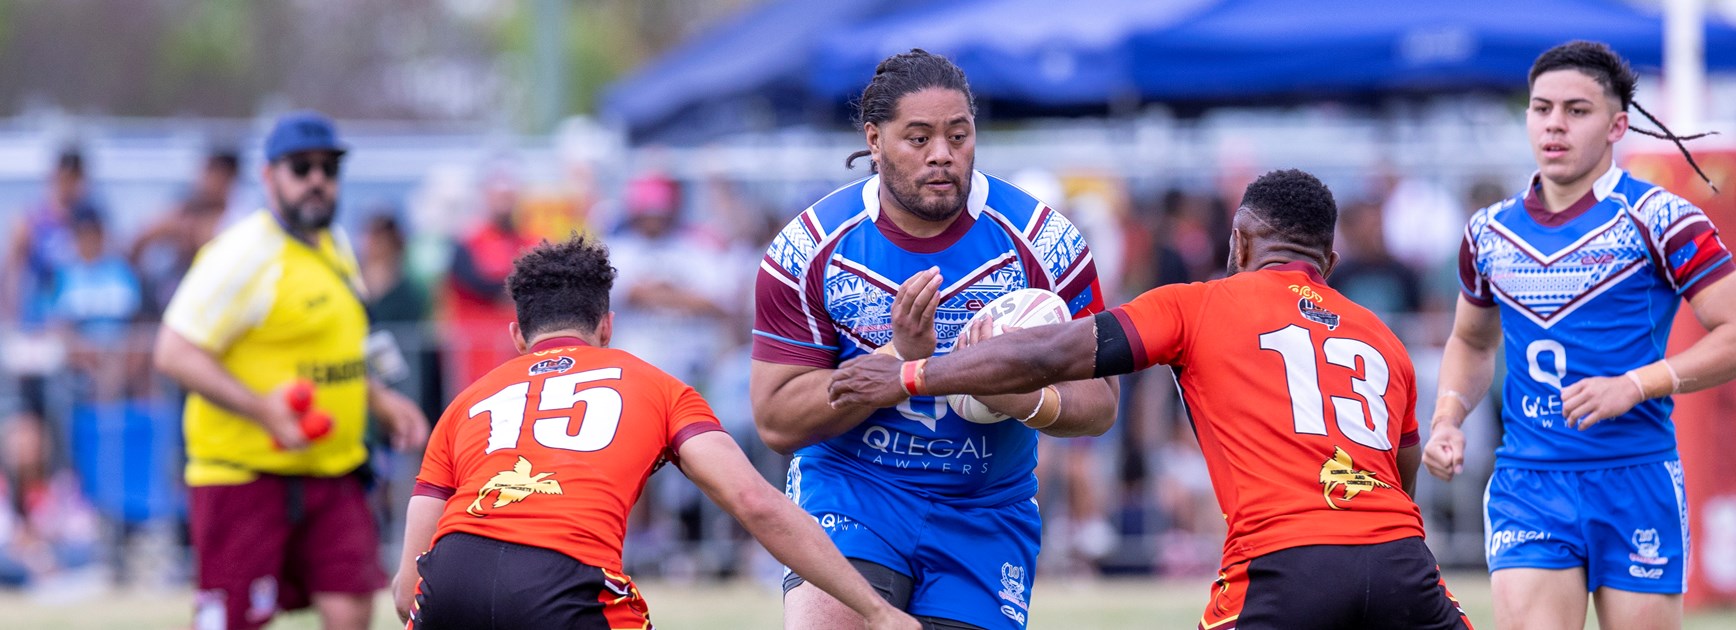 Samoa the big winners as QPICC makes successful return